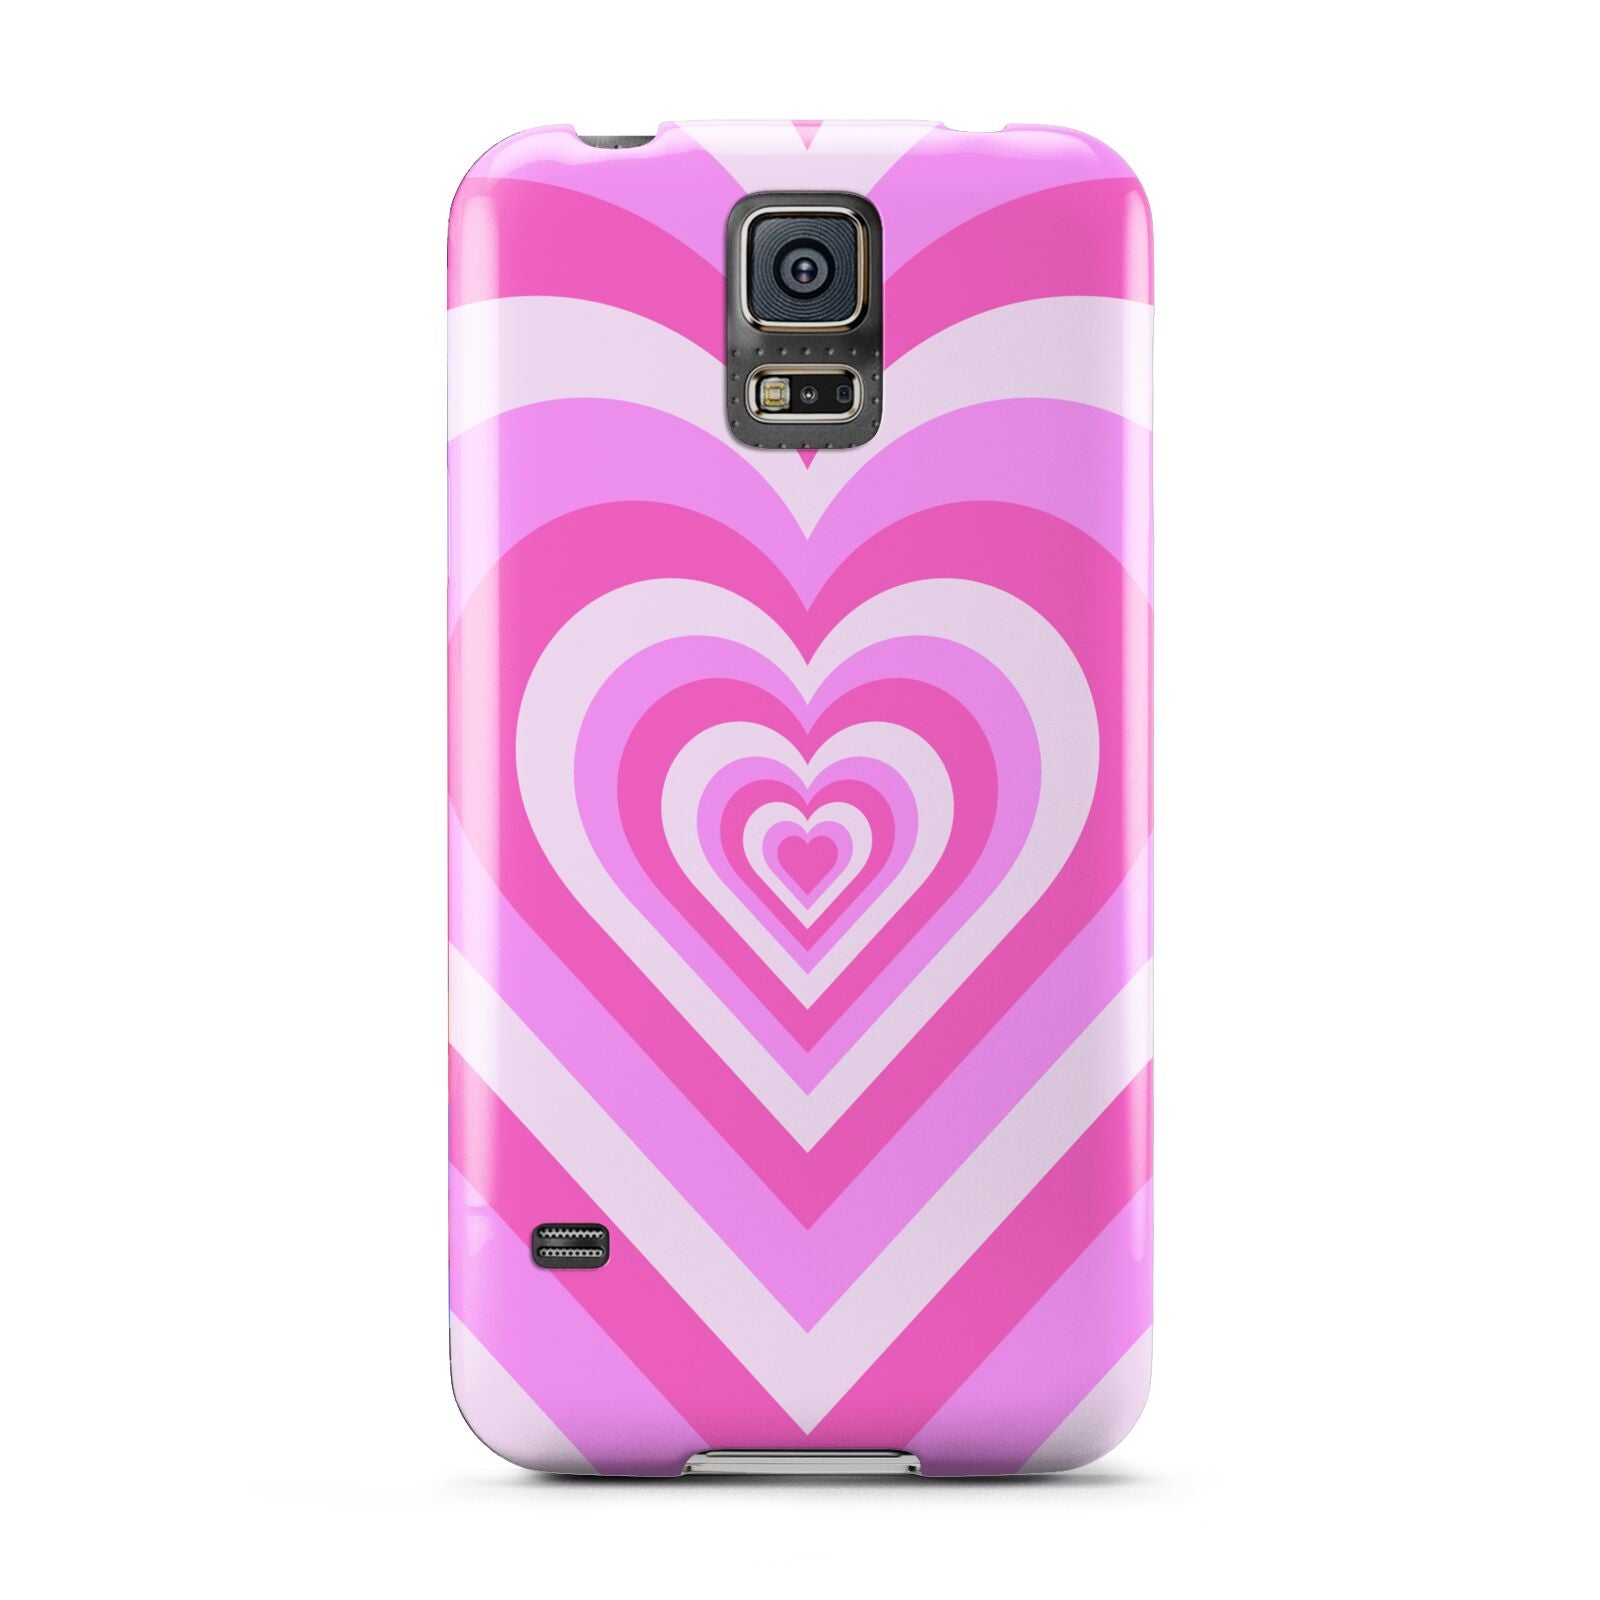 Aesthetic Heart Samsung Galaxy S5 Case